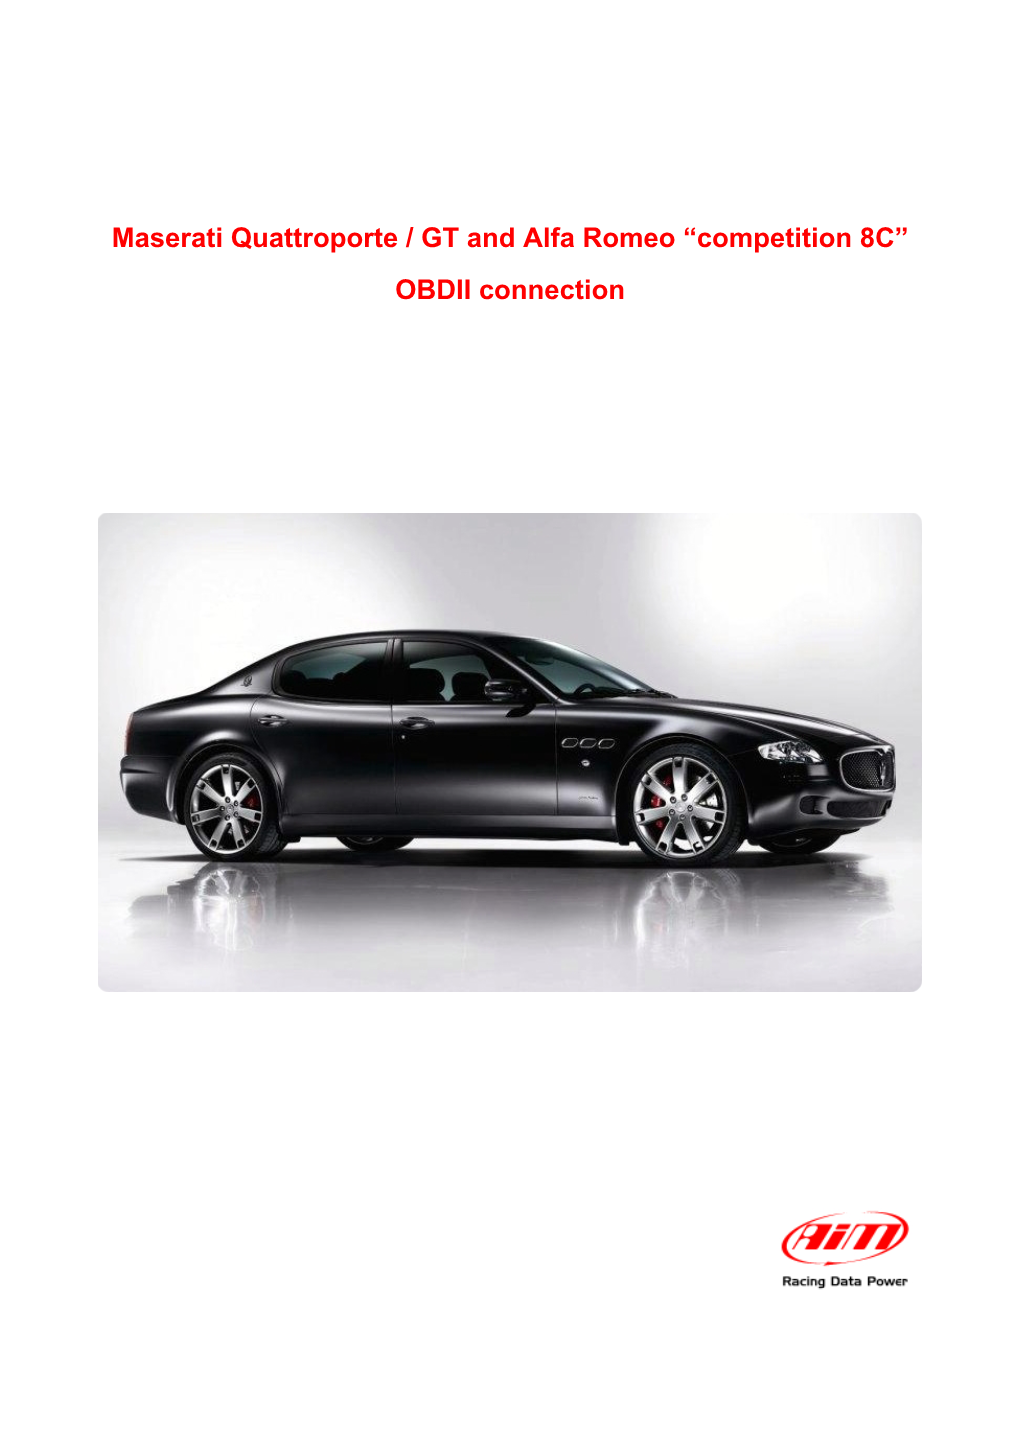 Maserati Quattroporte / GT and Alfa Romeo “Competition 8C” OBDII Connection Maserati – ECU Bosch ME 7.1.1 ECU Technical Documentation Release 1.00